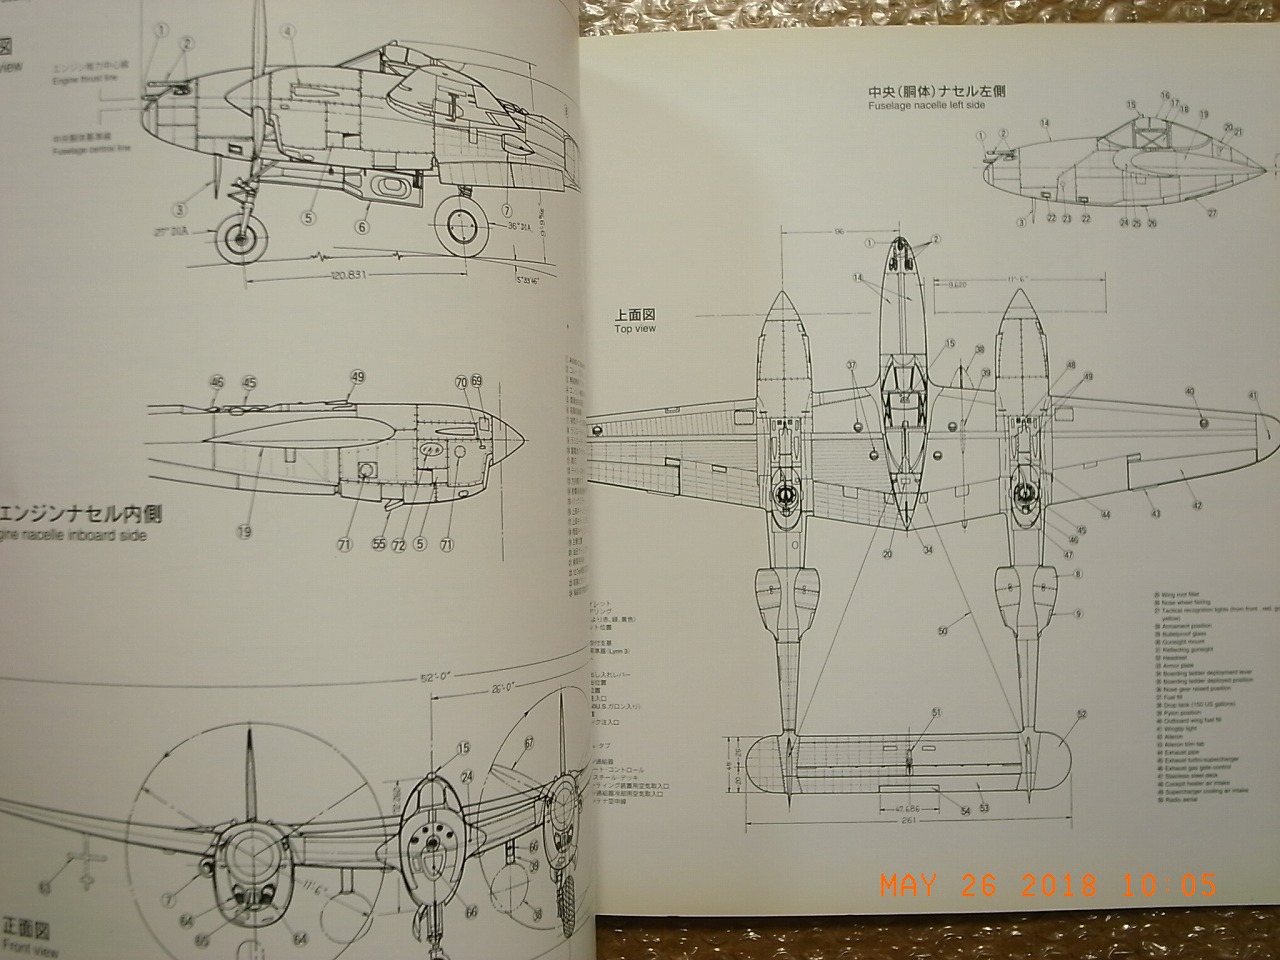 LOCKHEED P-38 LIGHTNING, PICTORIAL MONOGRAPH AERO DETAIL #28, DAINIPPON ...